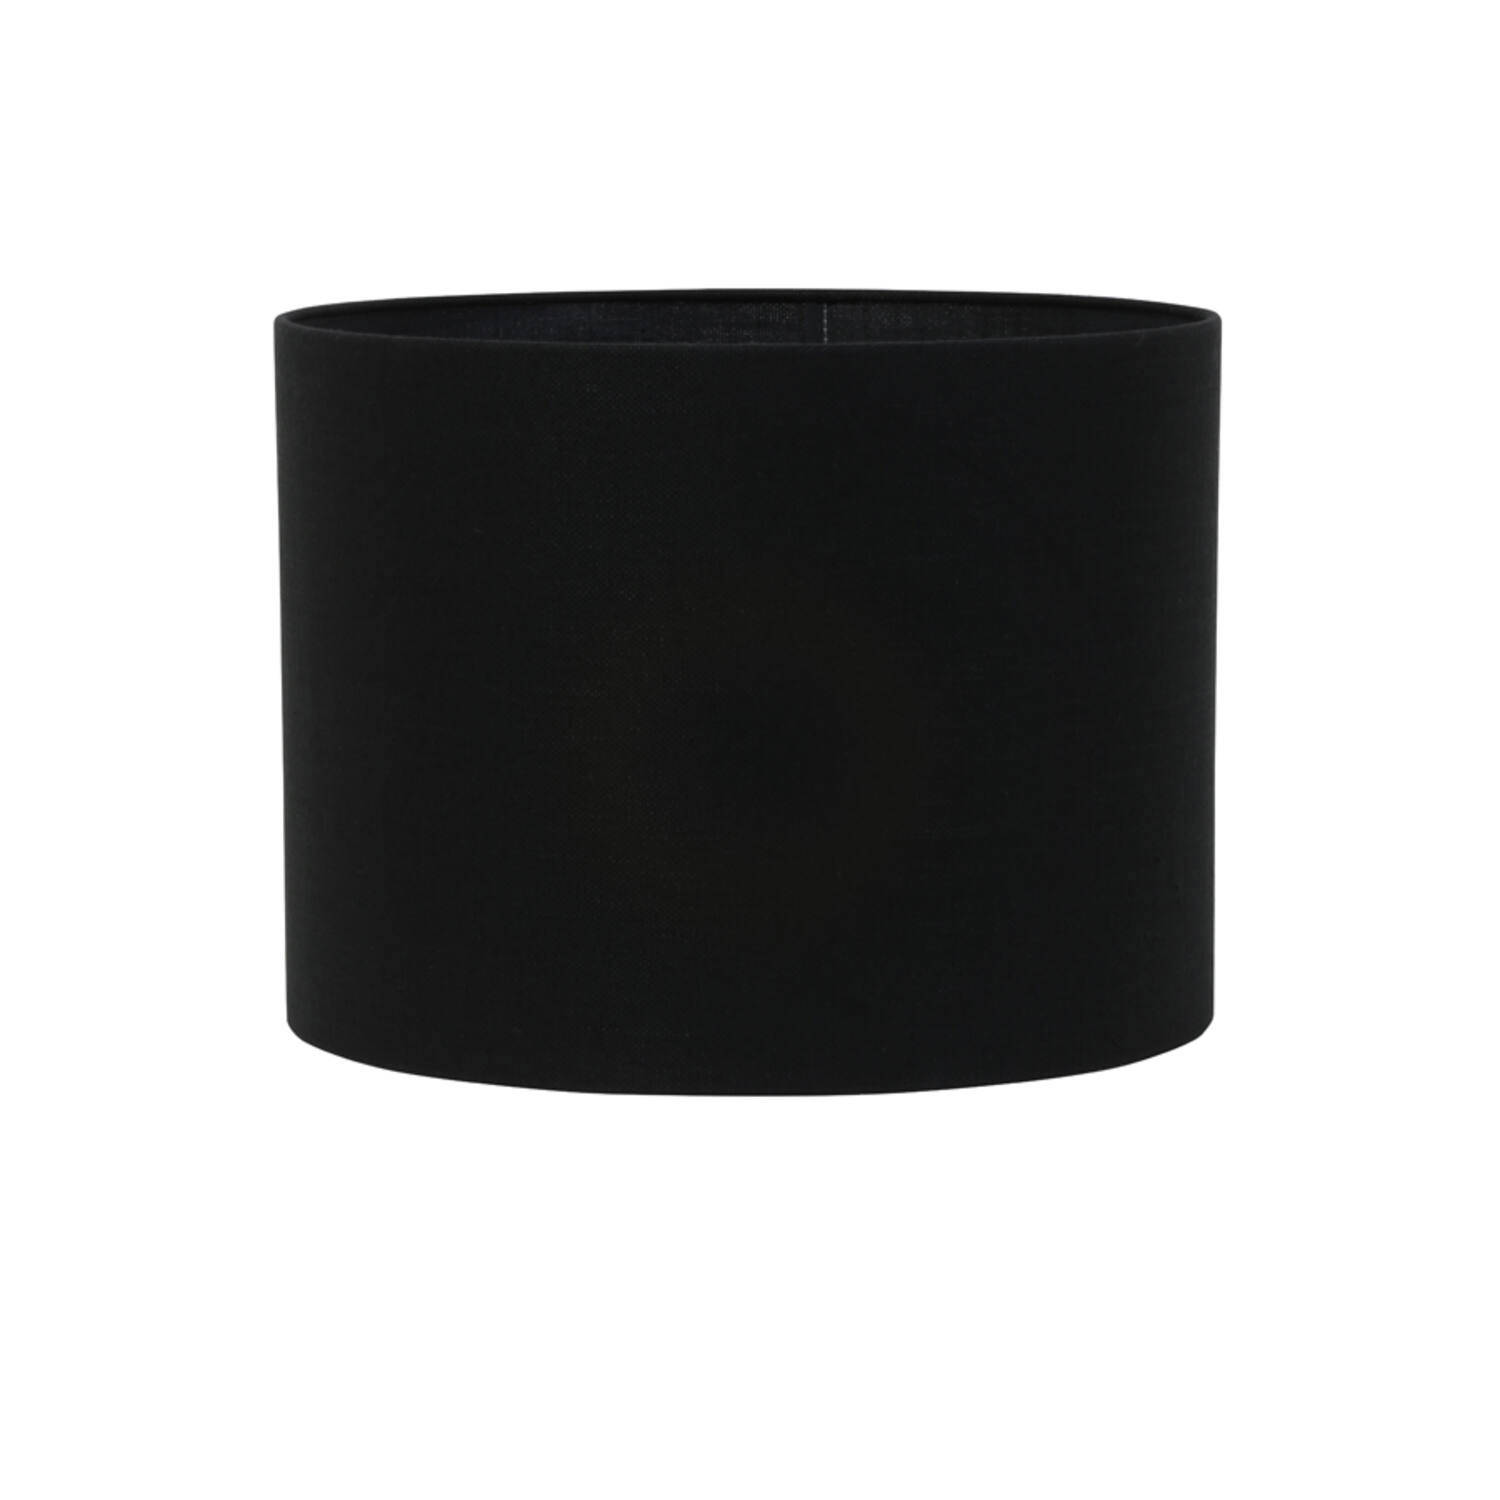 Kap cilinder 50-50-38 cm LIVIGNO zwart Light & Living